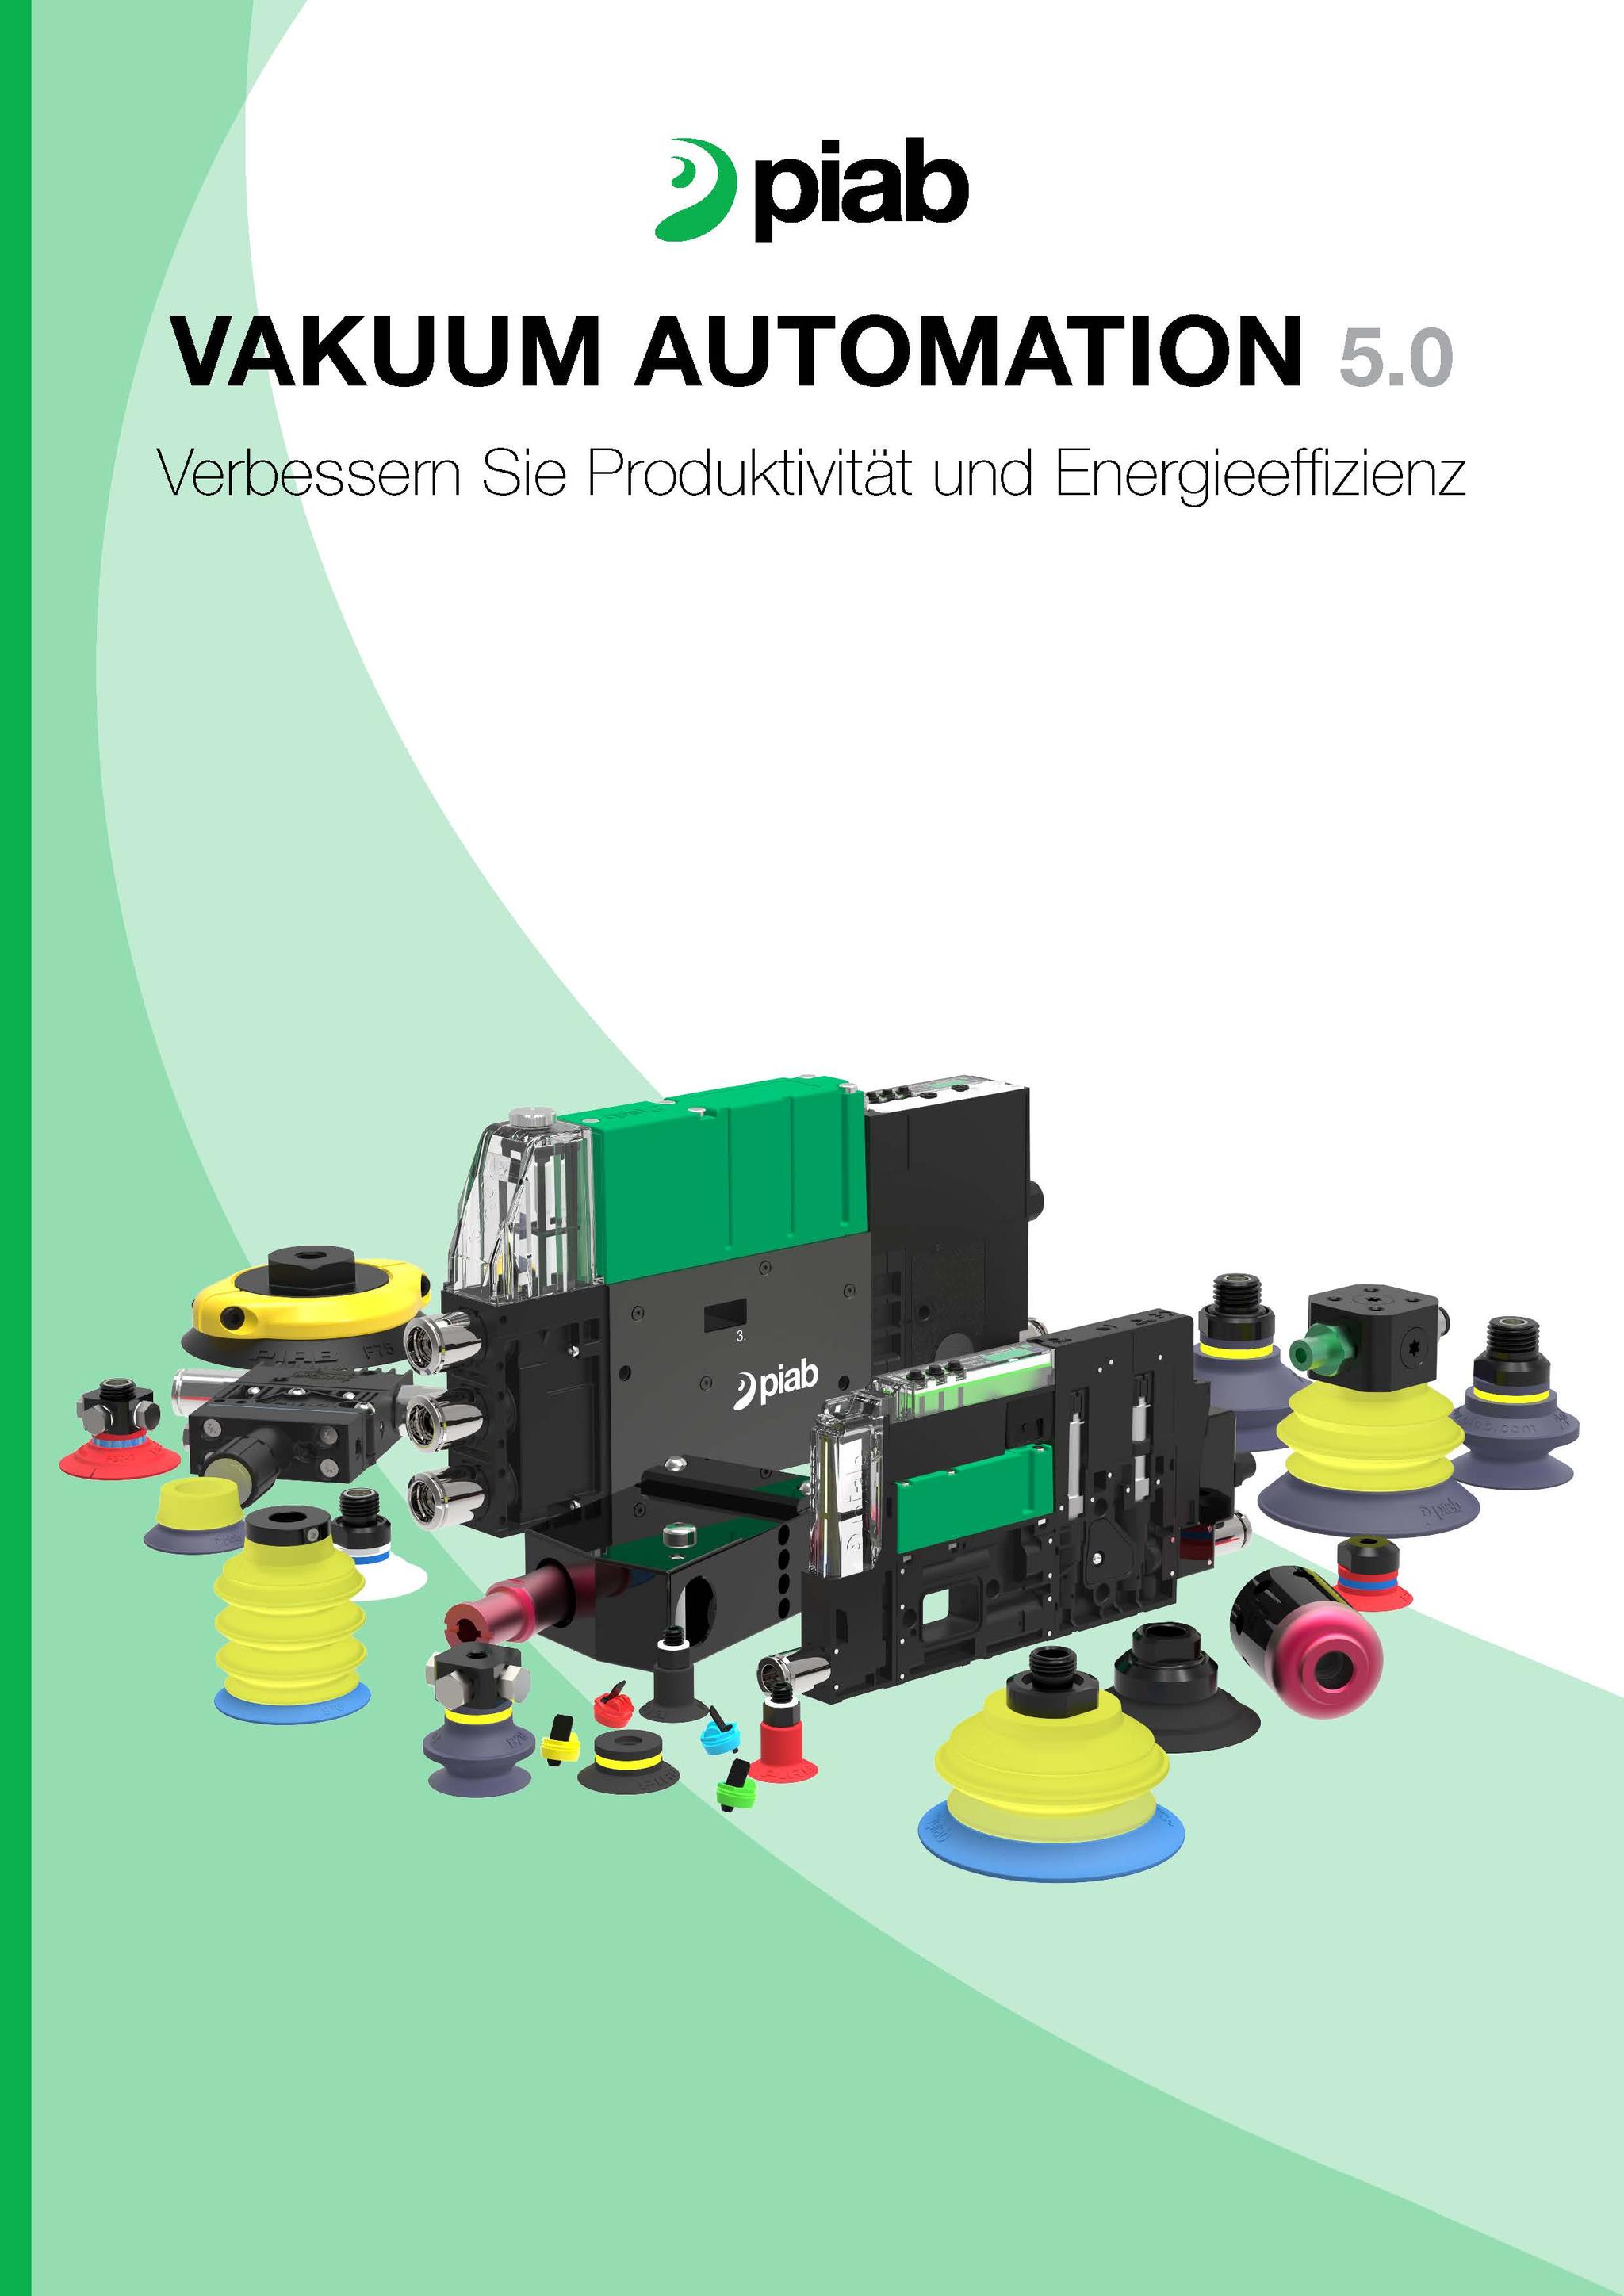 Piab Vakuum Automation DE